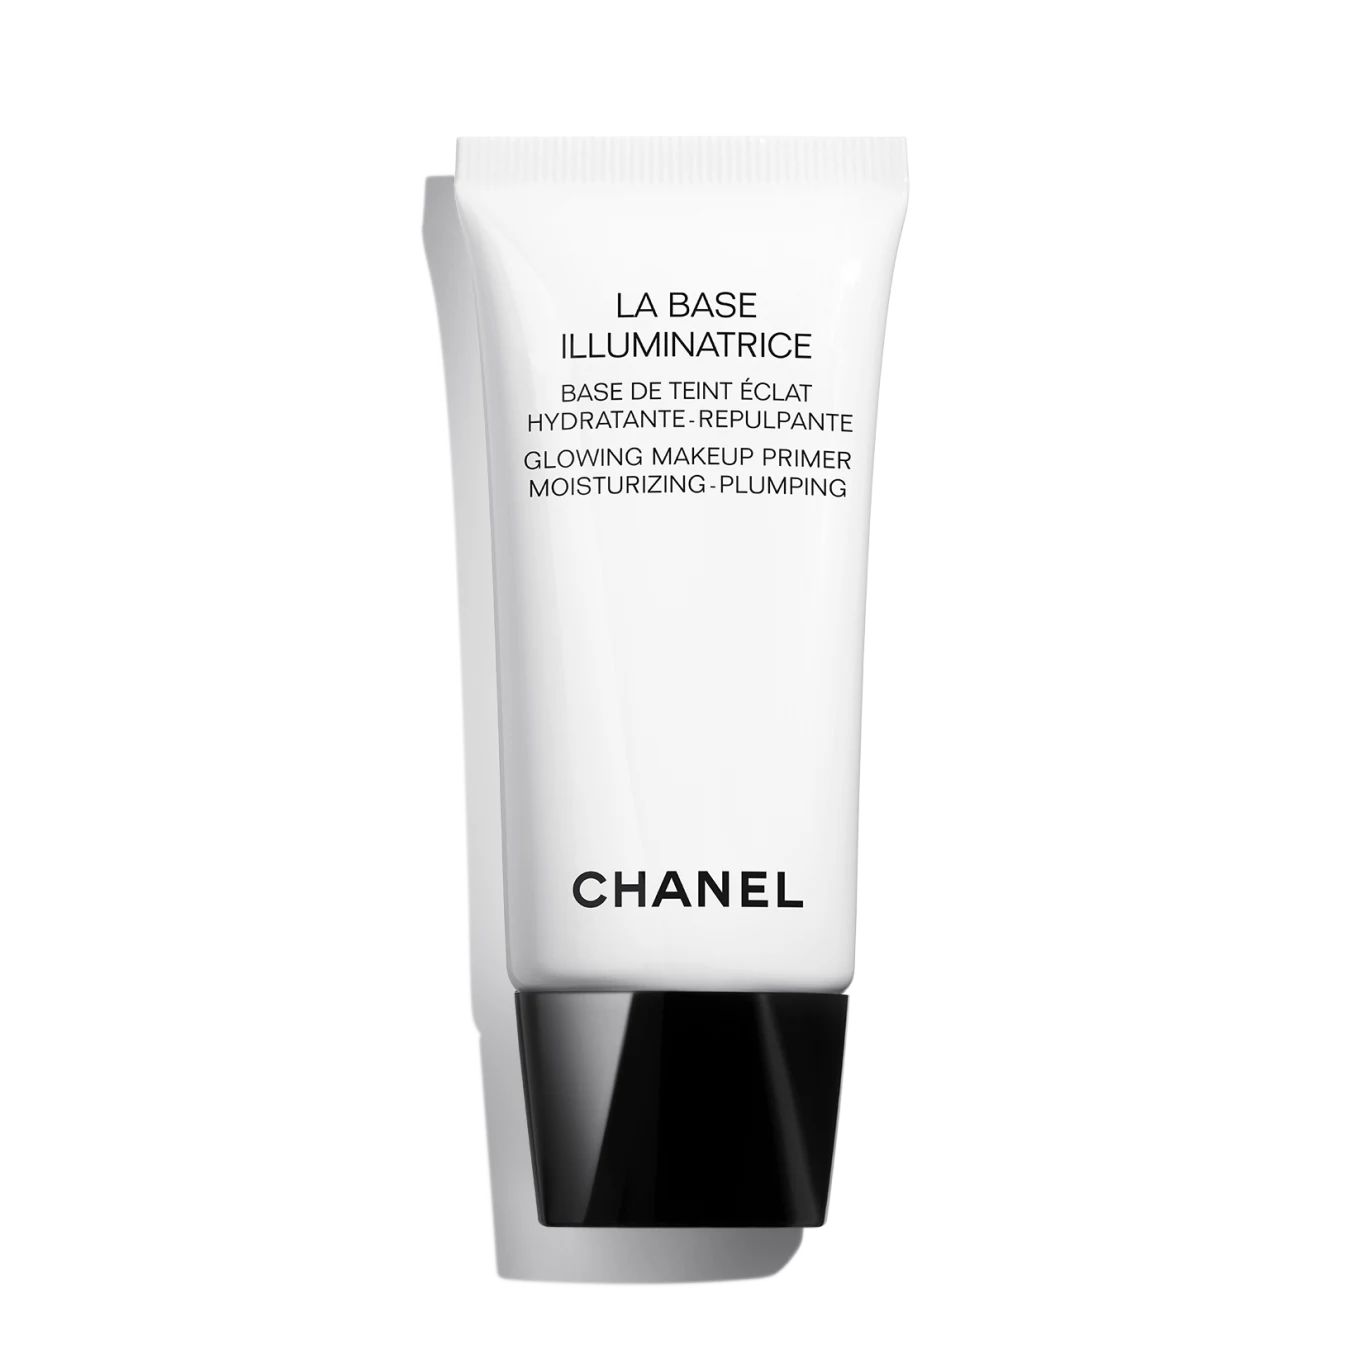 LA BASE ILLUMINATRICE

            
            Glowing Makeup Primer Moisturizing – Plumping | Chanel, Inc. (US)